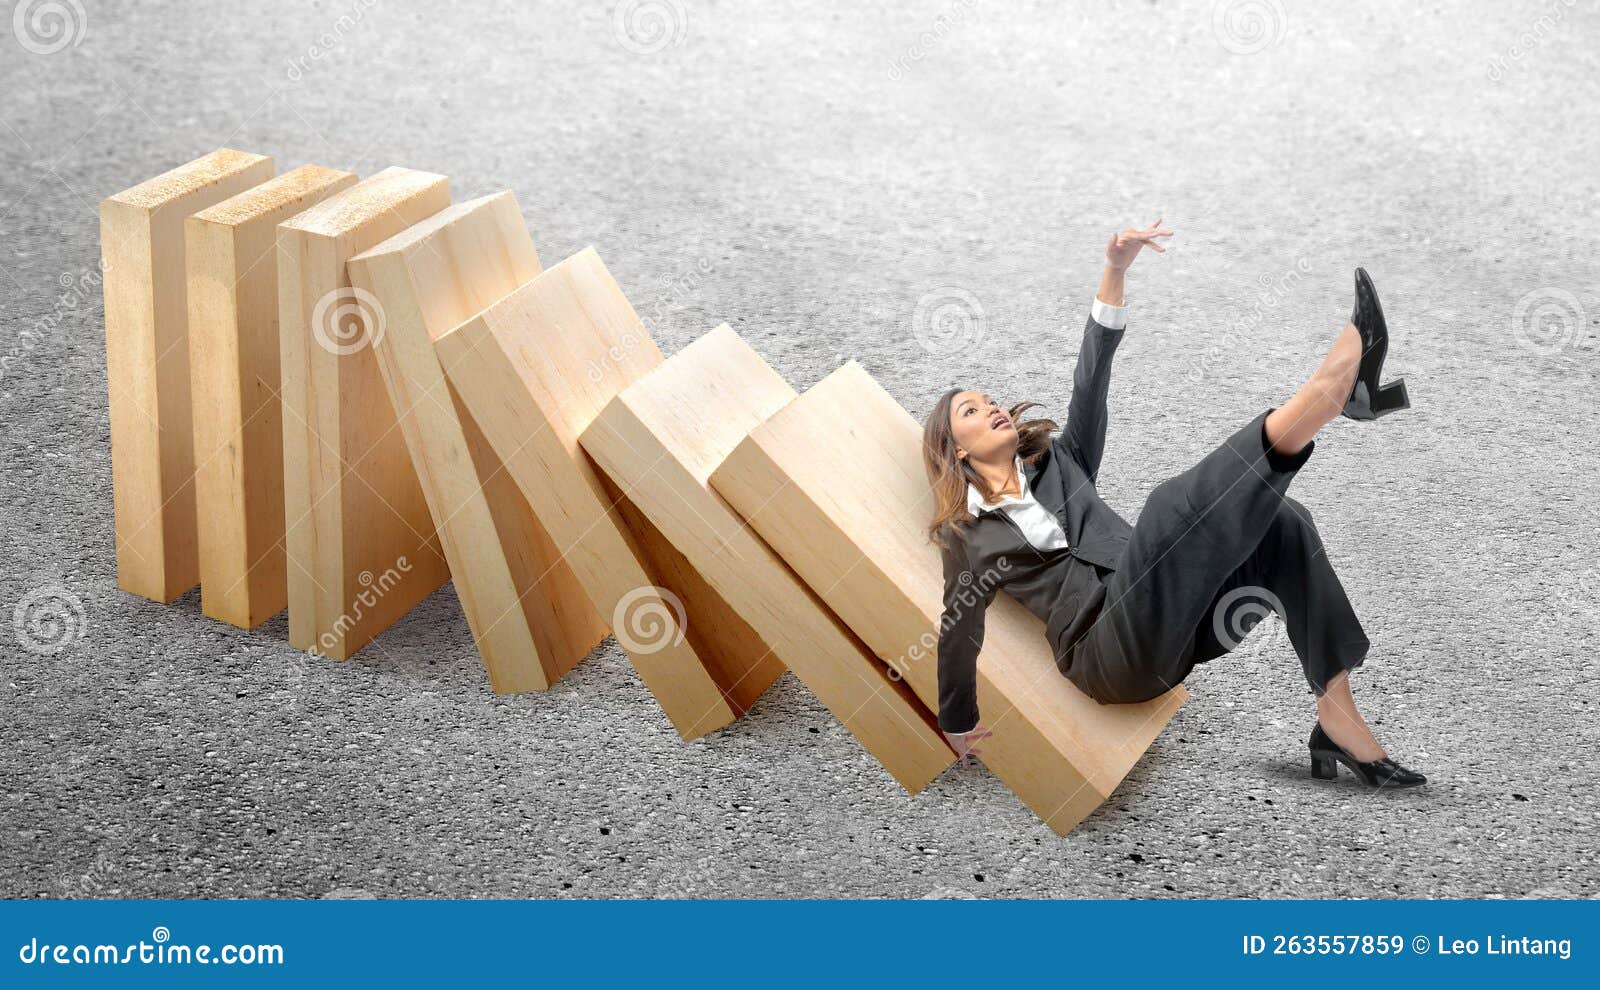 asian businesswoman slipped on topple wooden block